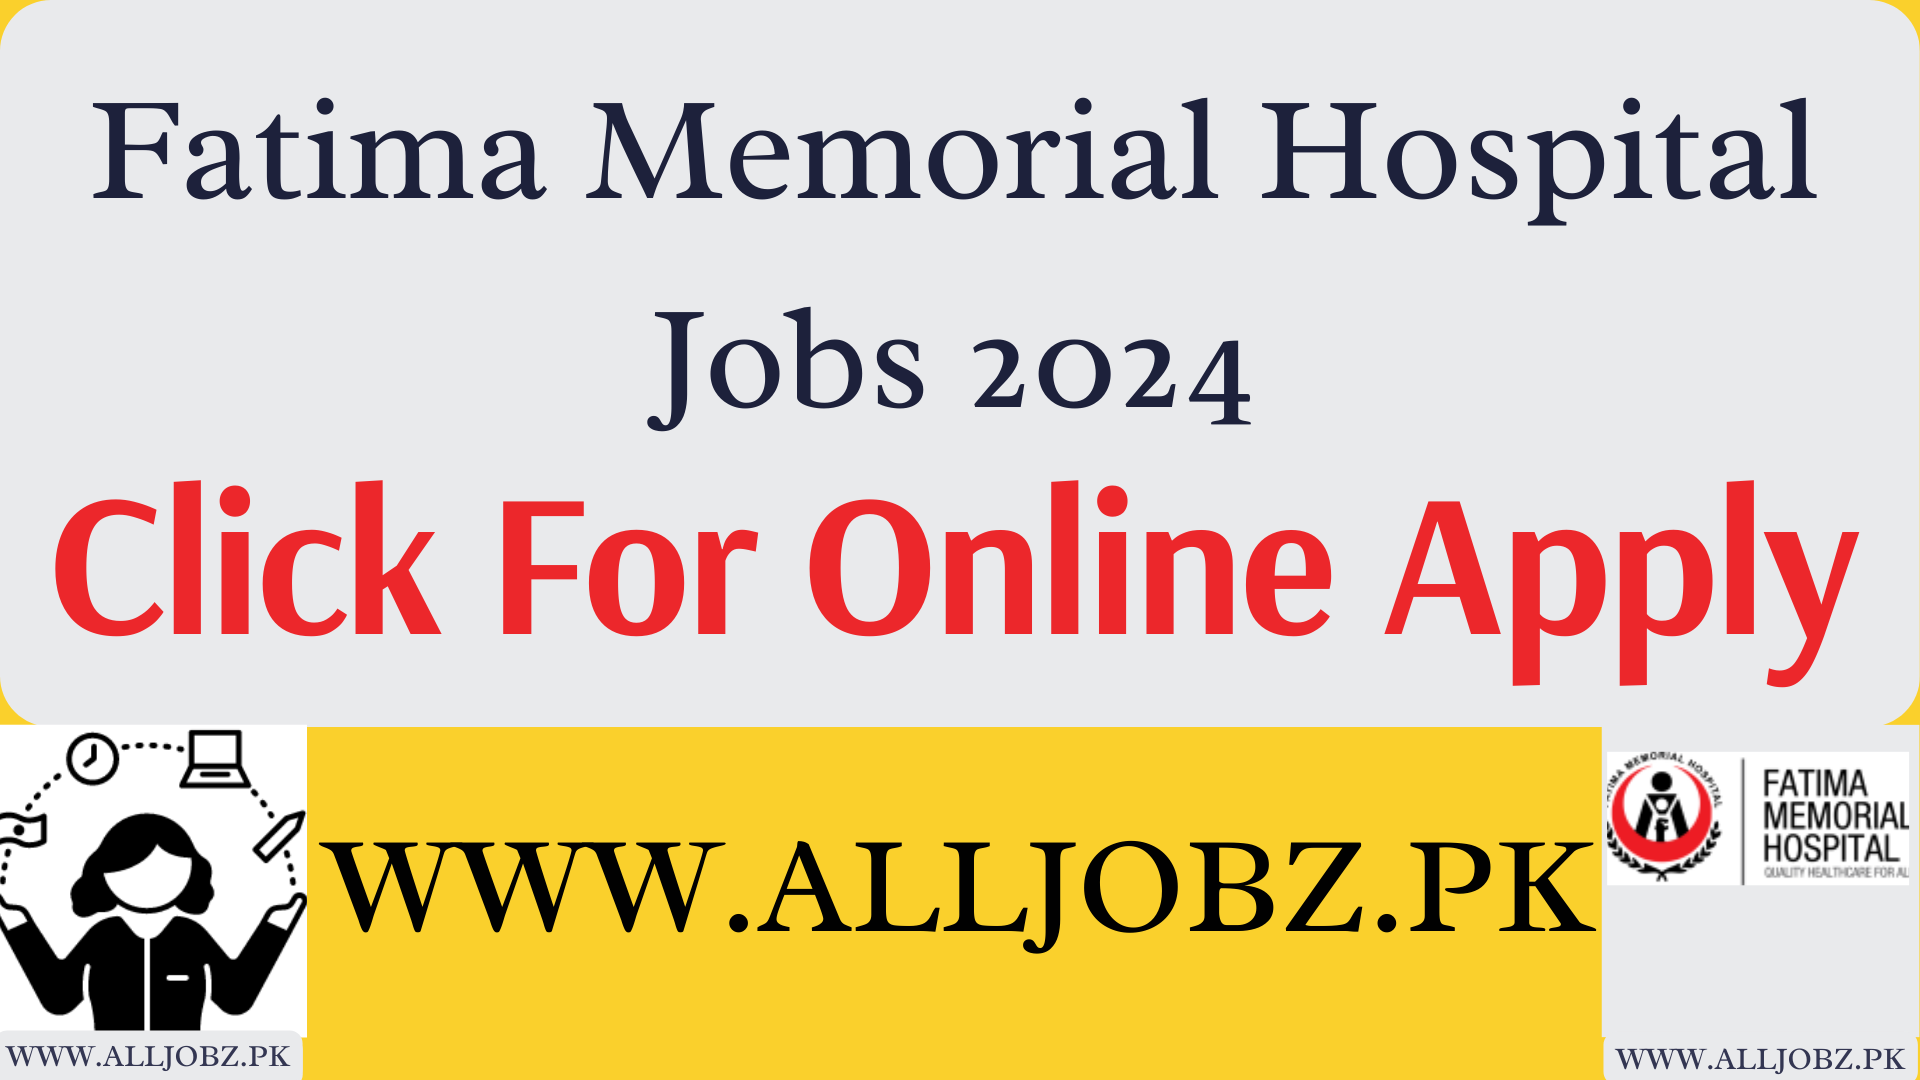 Fatima Memorial Hospital Jobs 2024